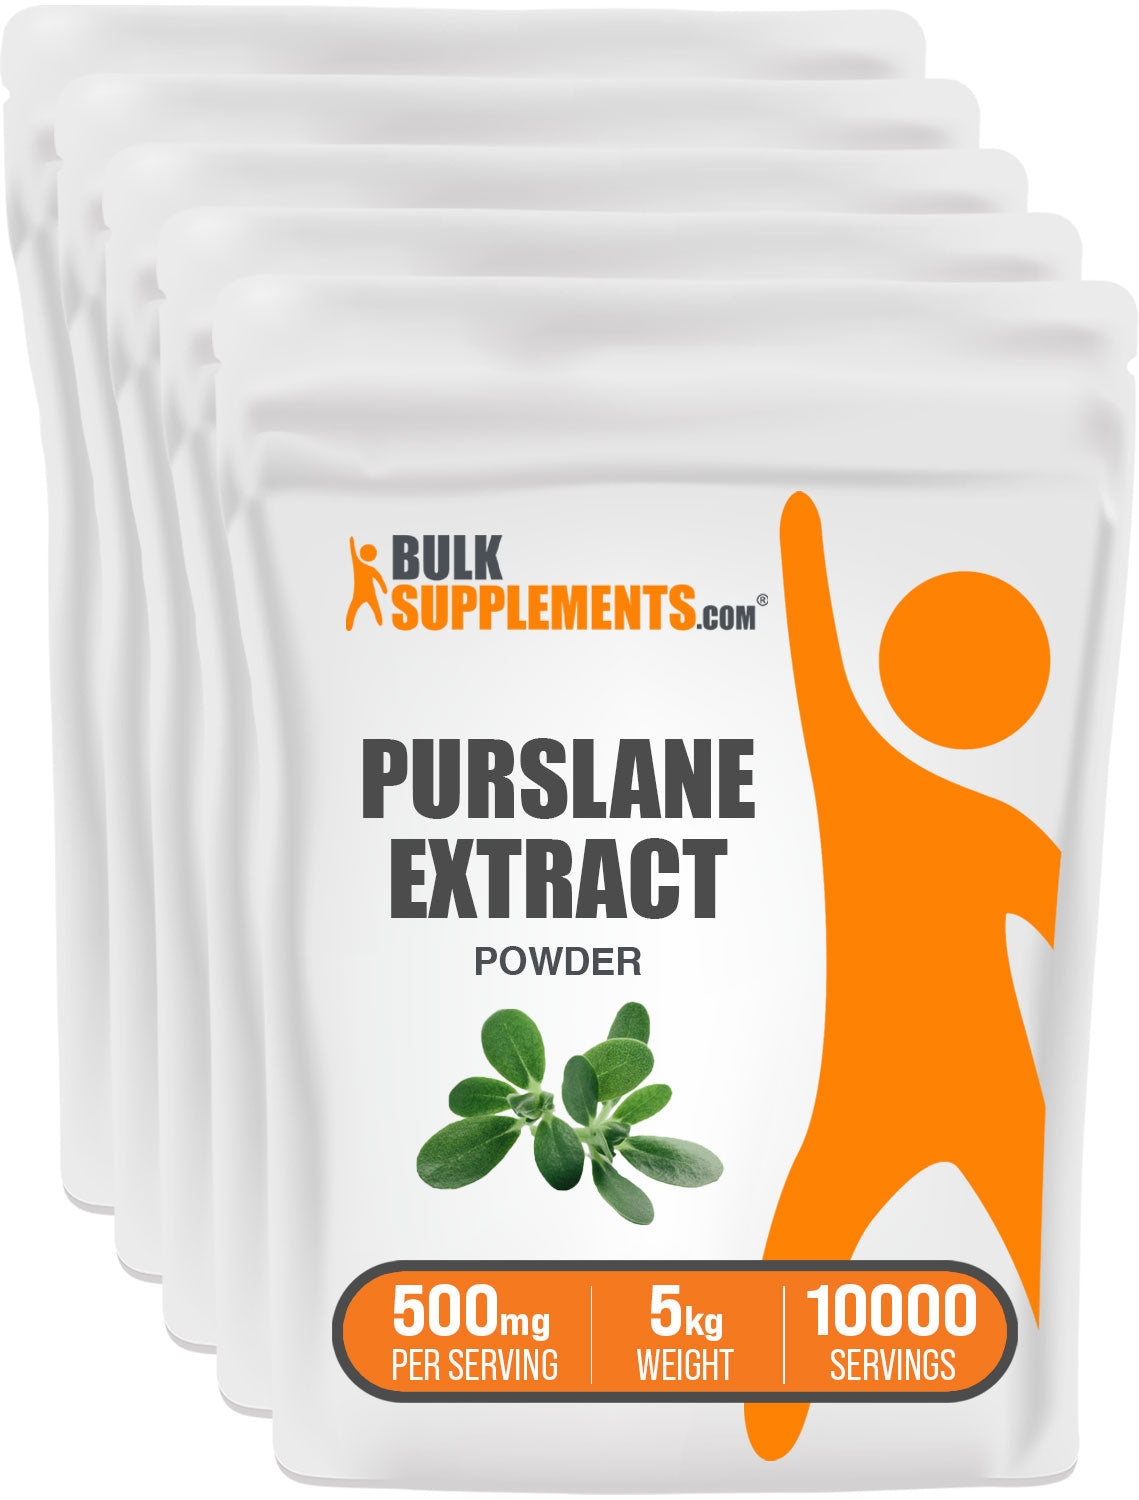 Purslane Extract 5kg Bag